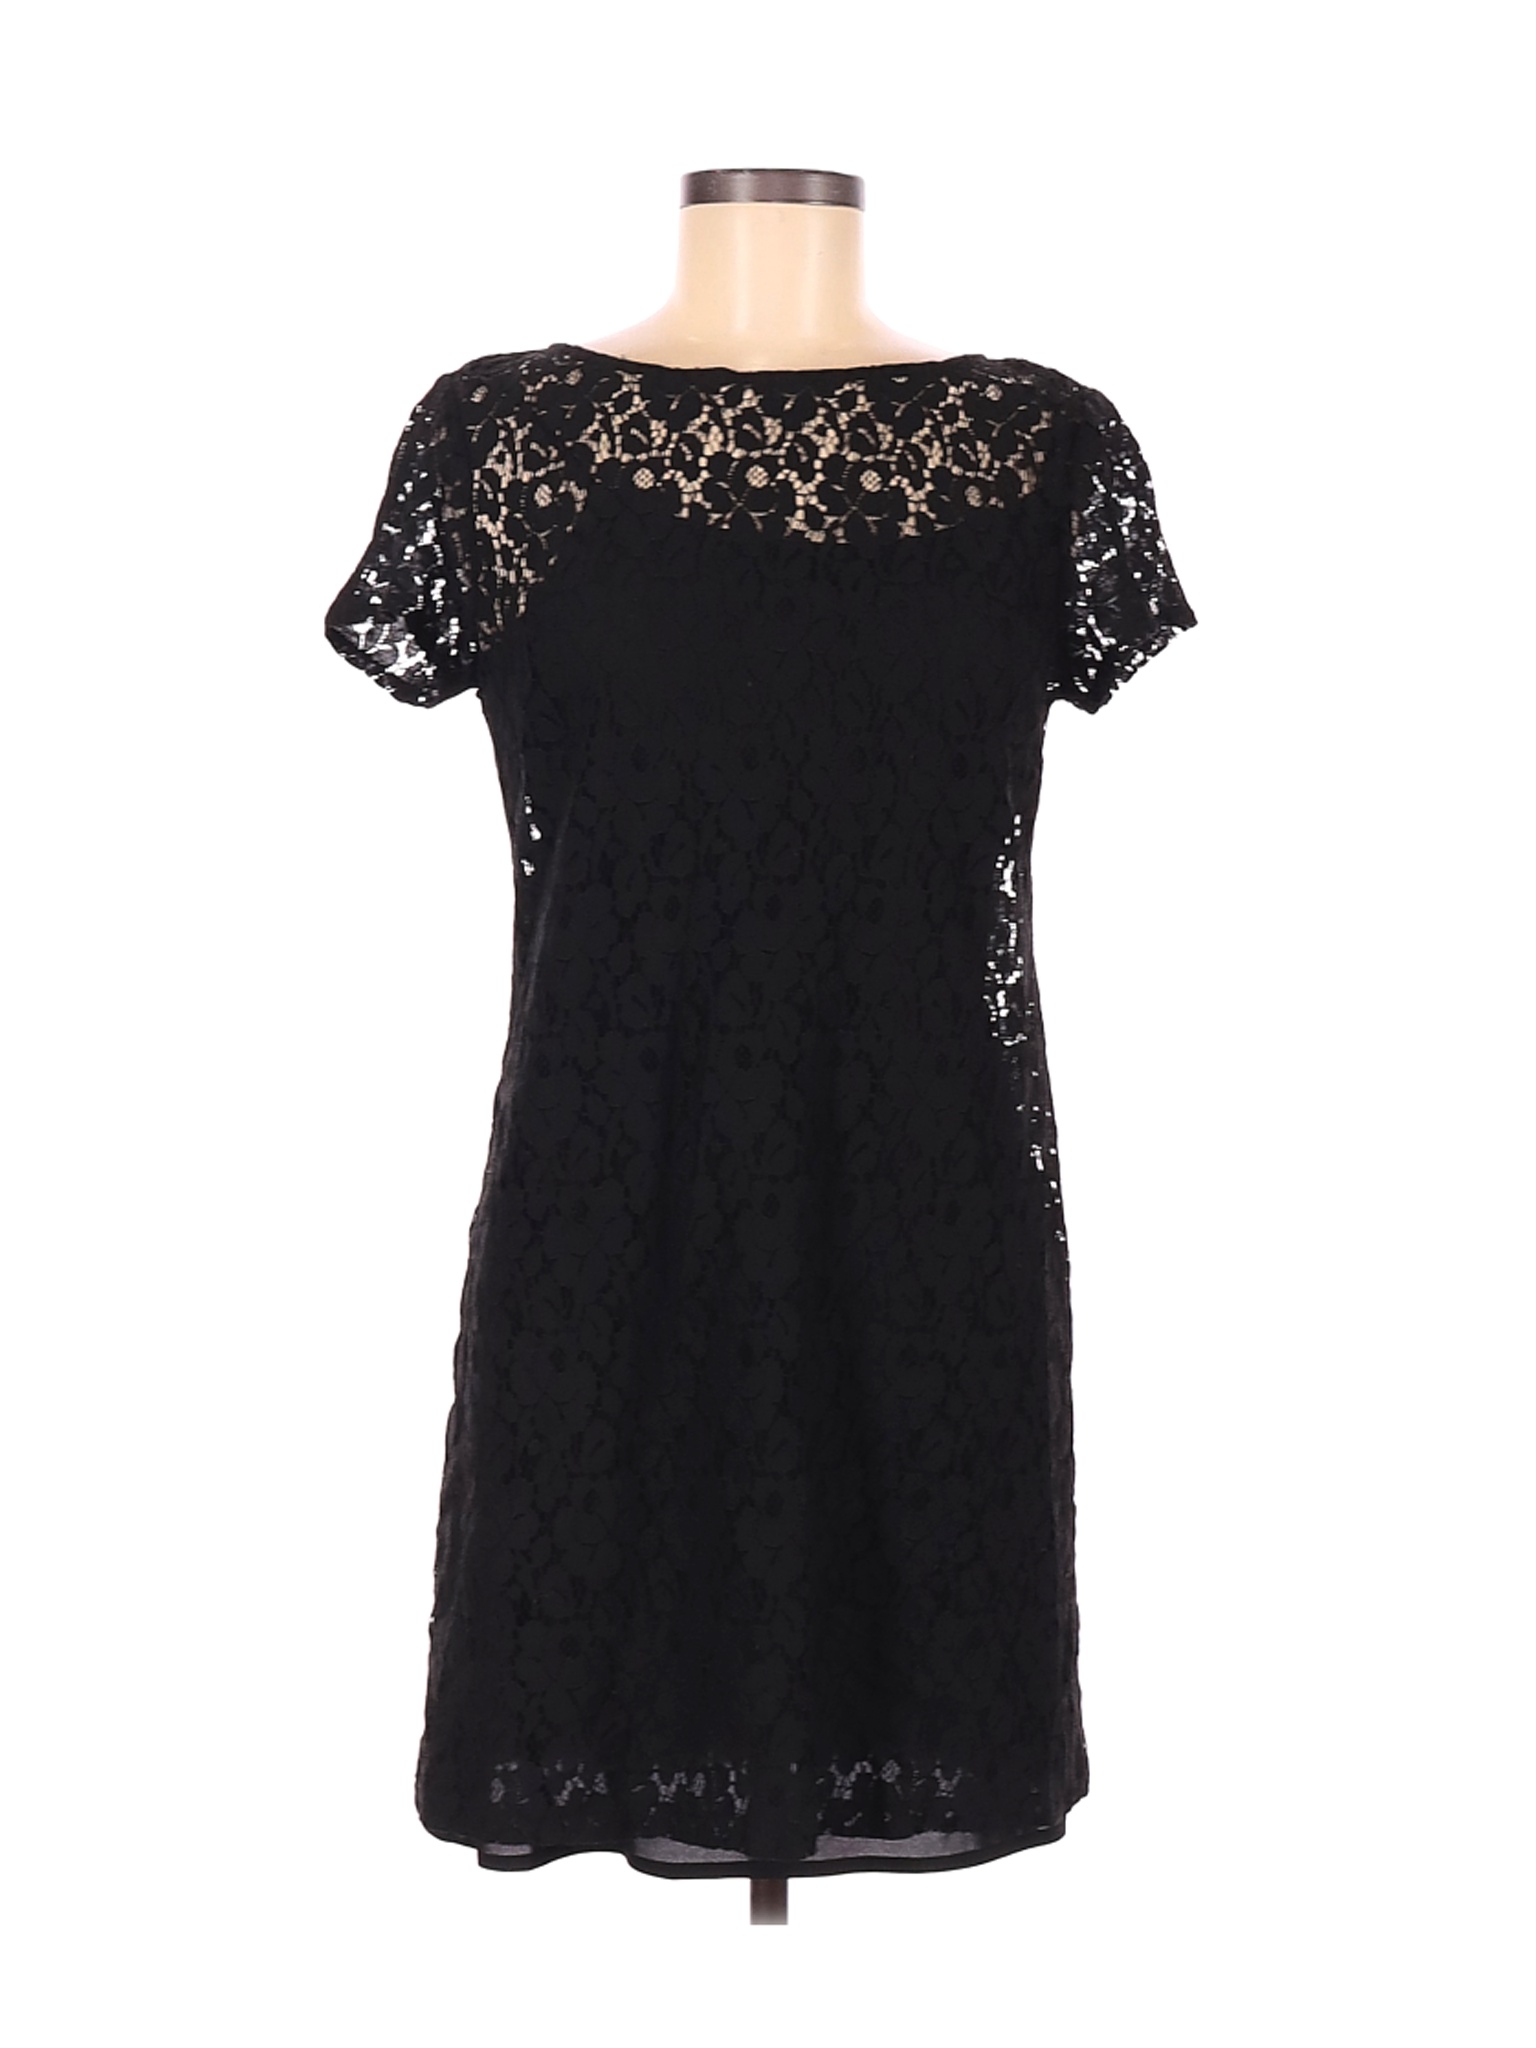 Alex + Alex Women Black Casual Dress 6 | eBay